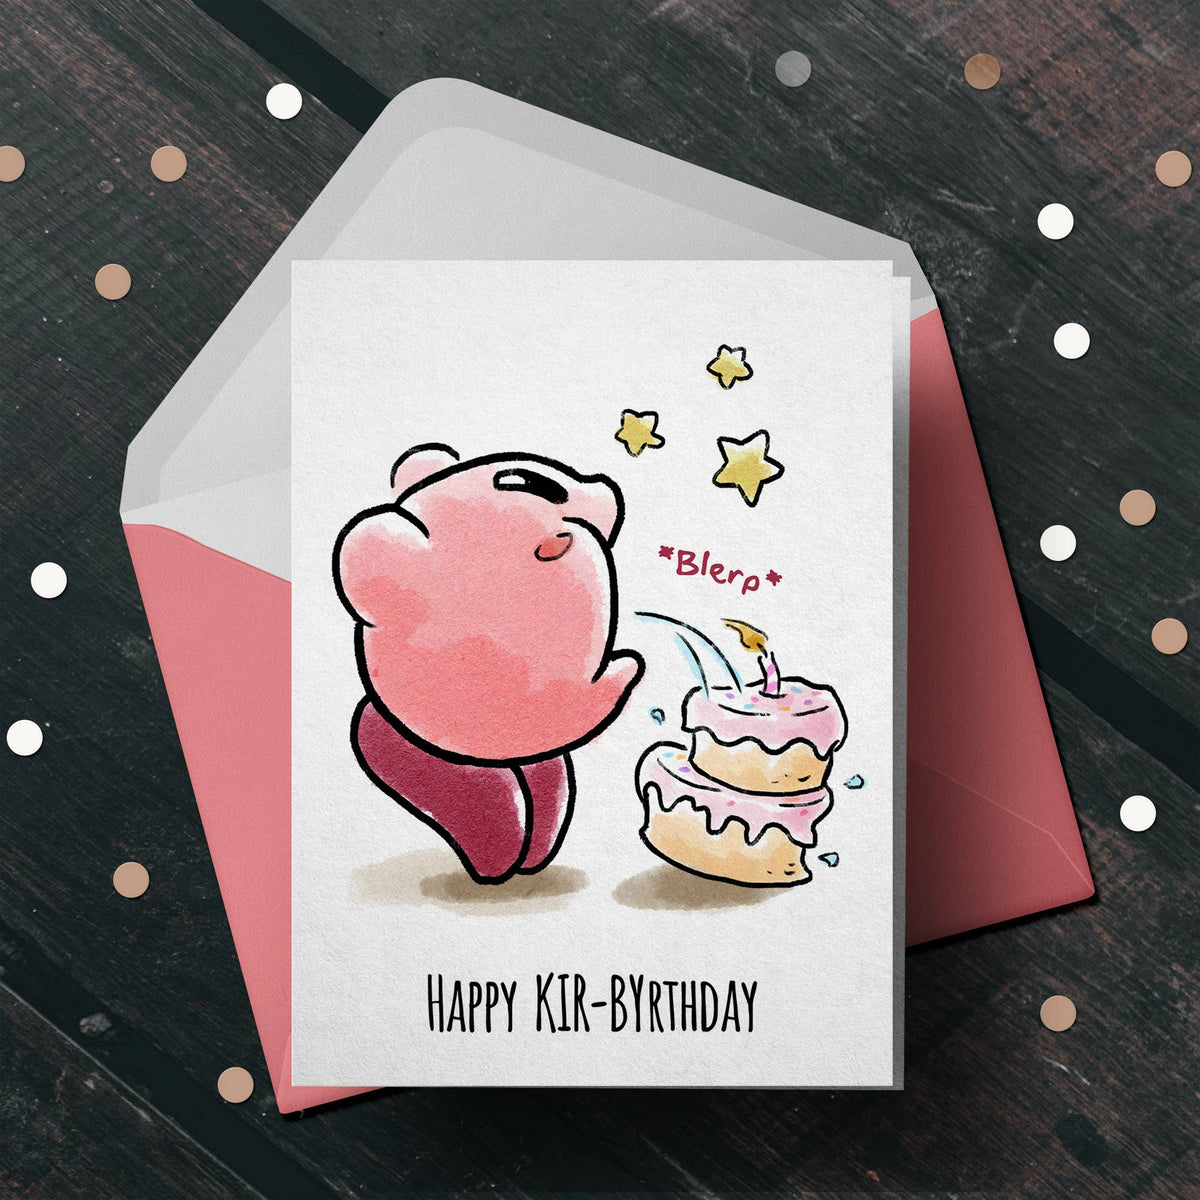 "Happy Kirby-thday" - Nintendo Gamer Birthday Card